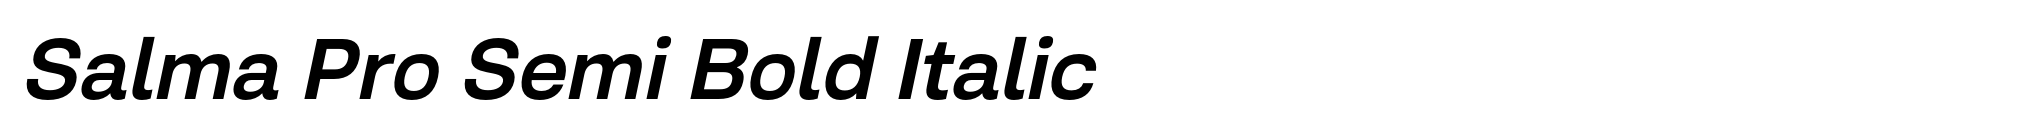 Salma Pro Semi Bold Italic image